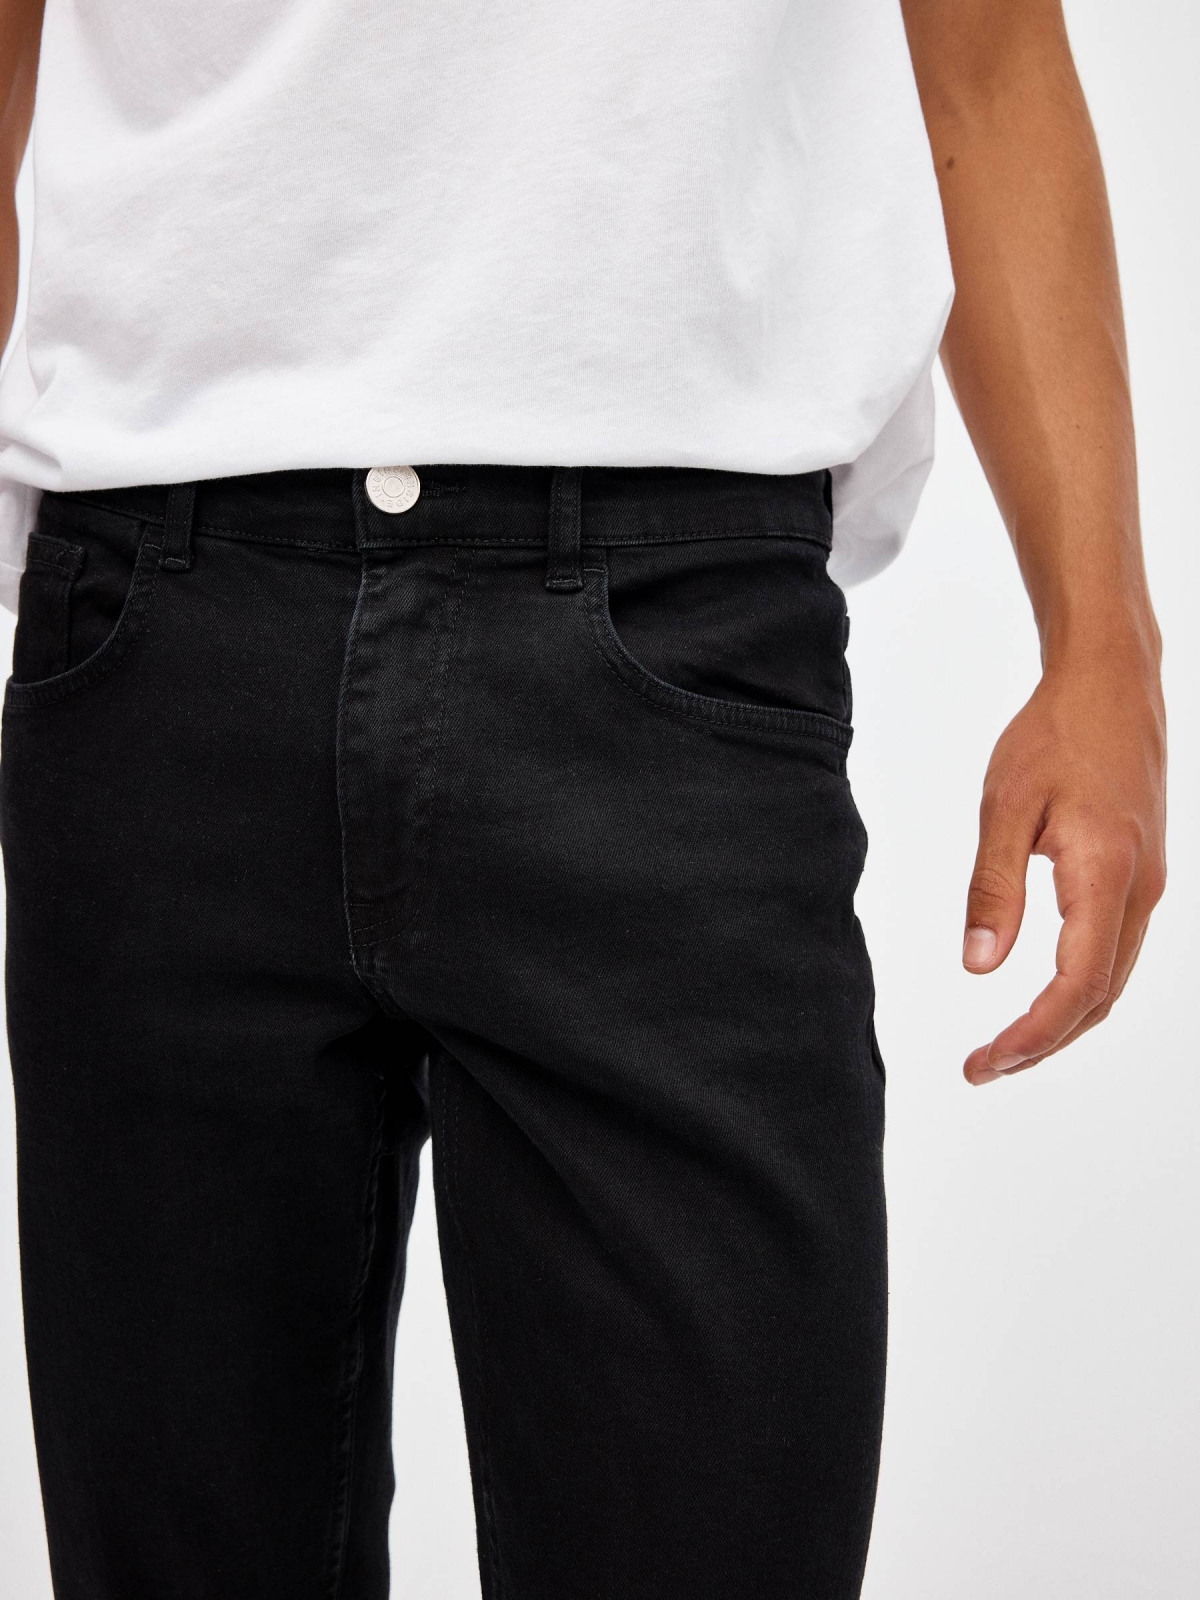 Black denim slim jeans black detail view